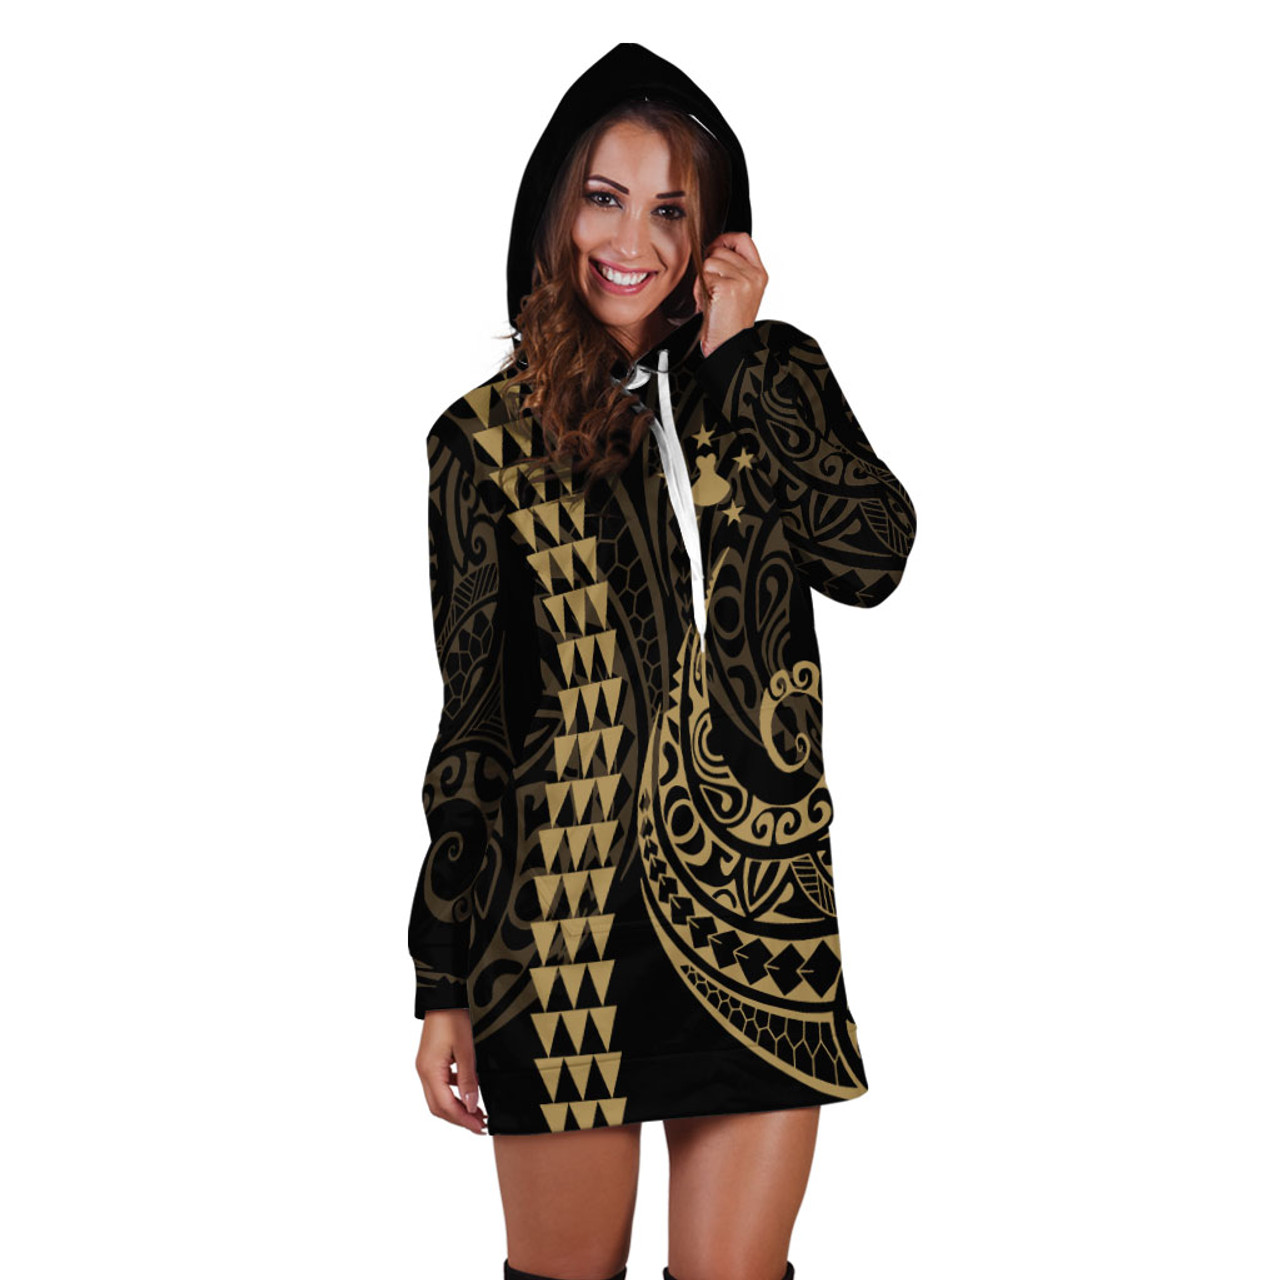 Austral Islands Hoodie Dress Kakau Style Gold